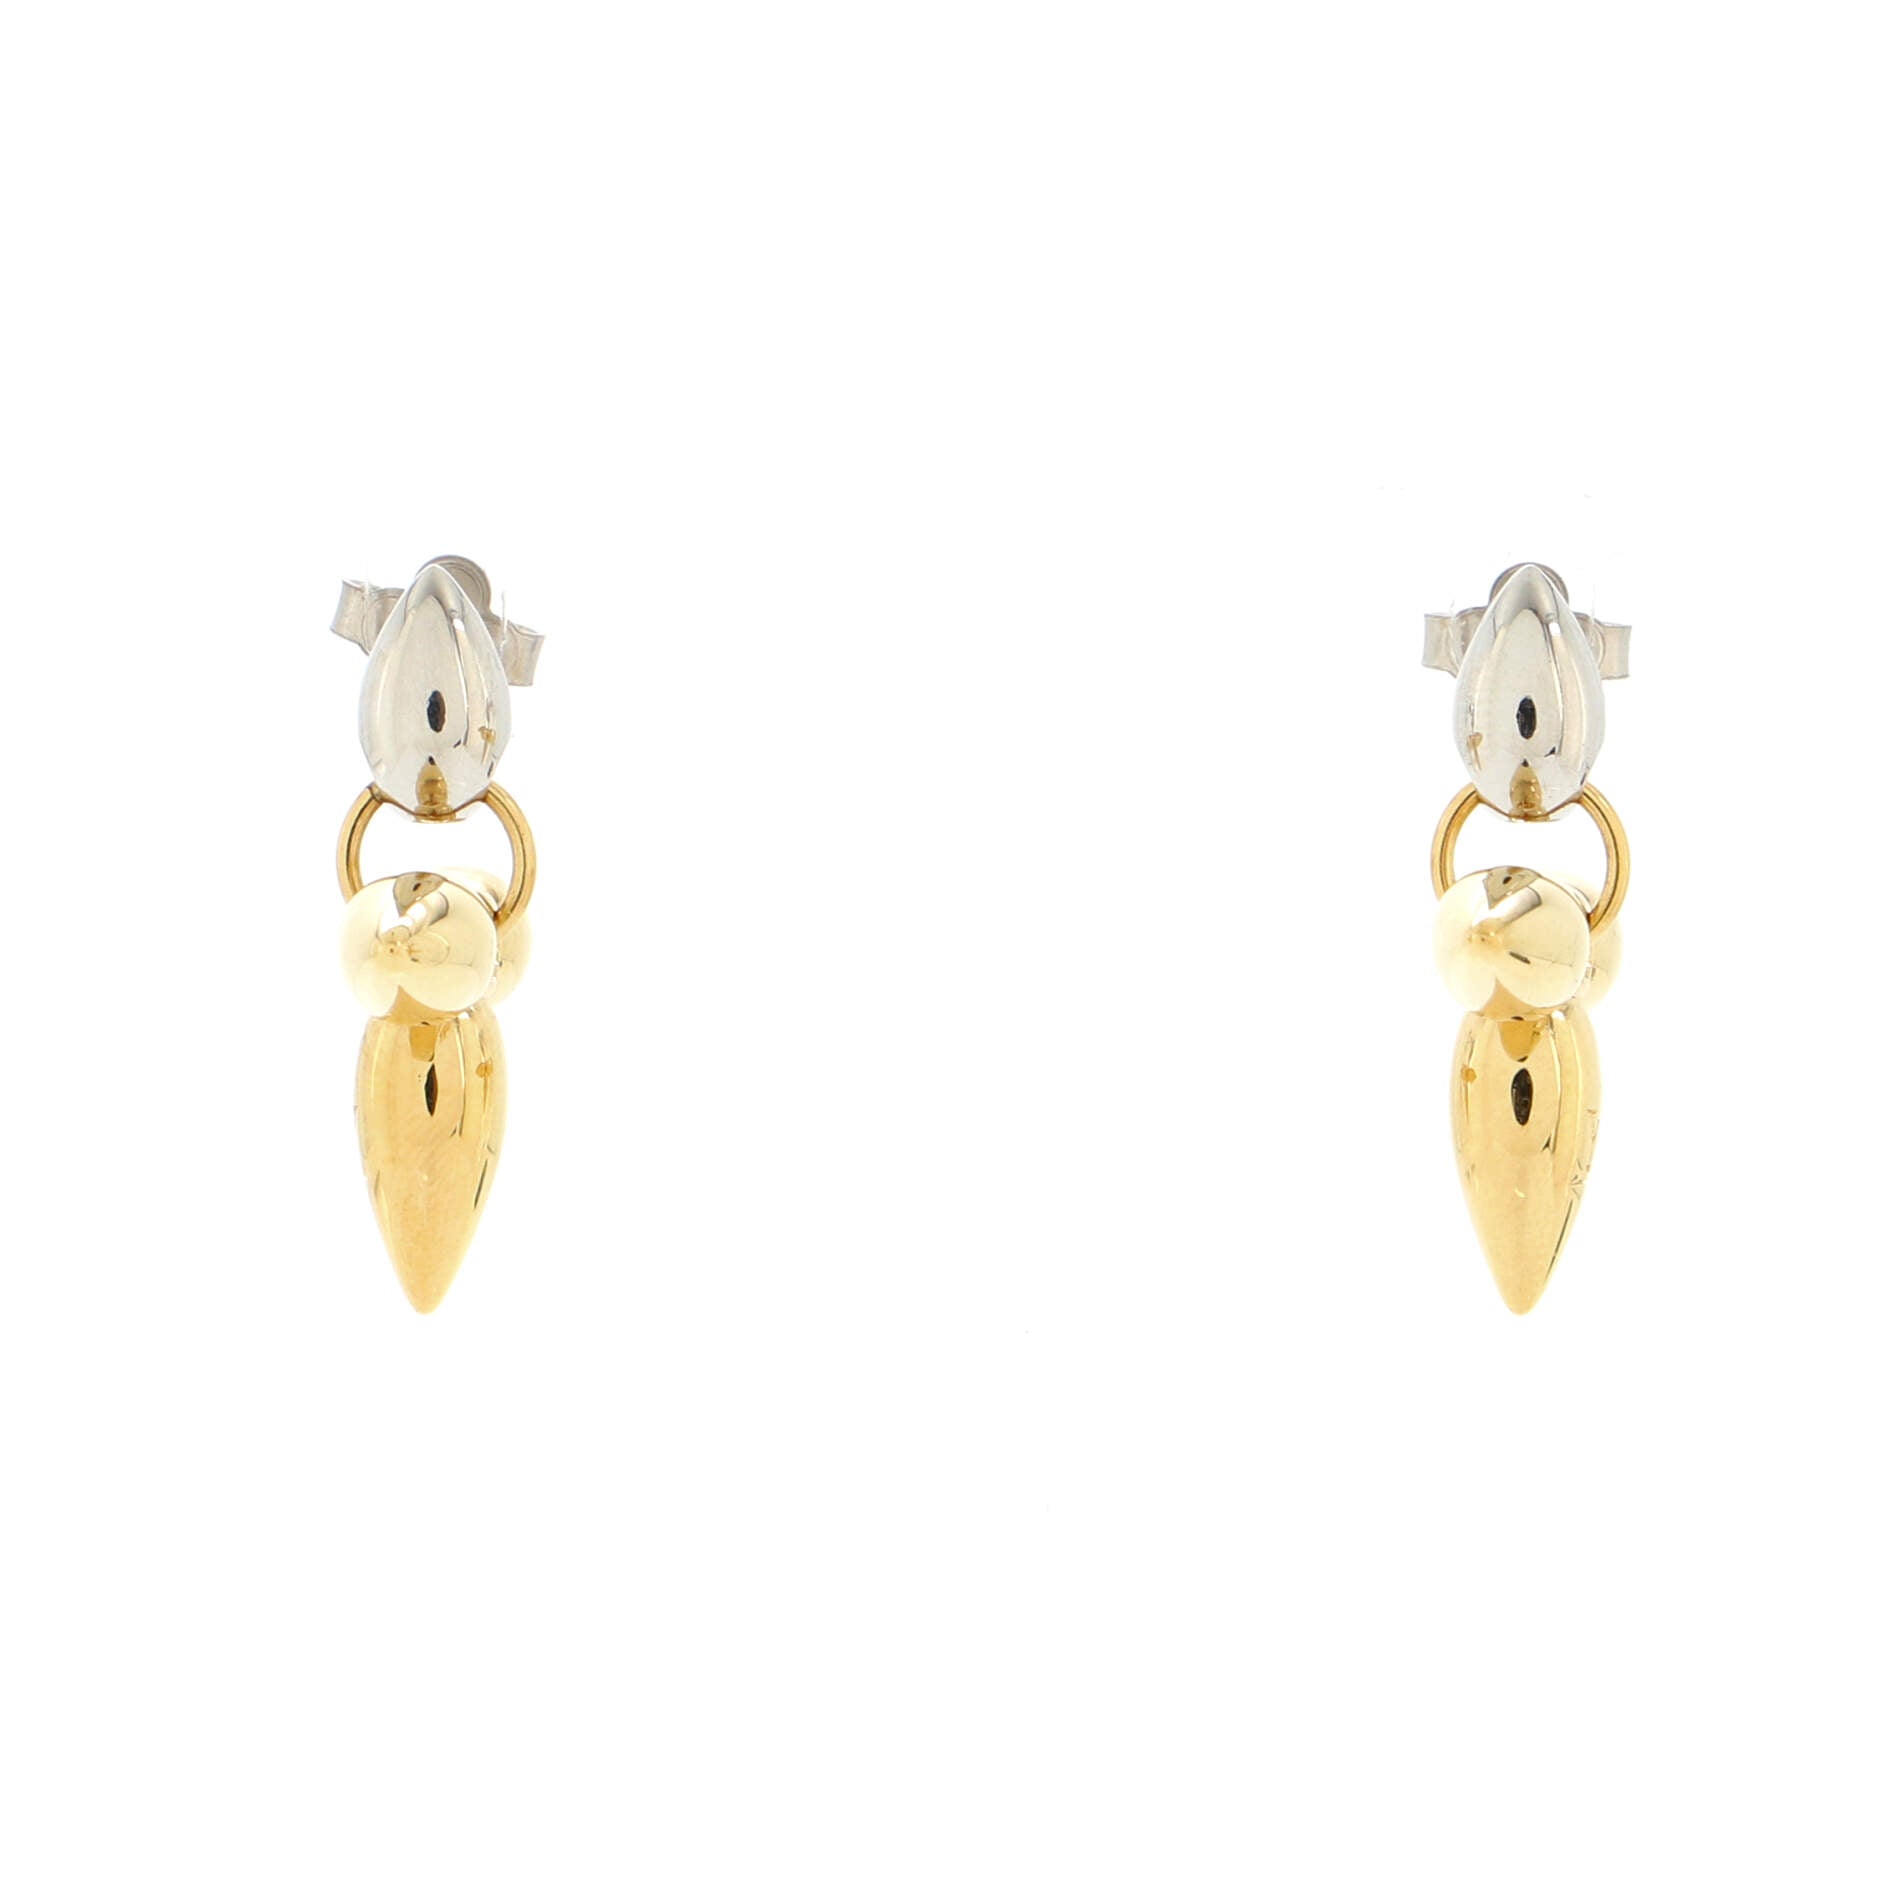 Shop Louis Vuitton Louisette stud earrings (M80267, M80268) by lifeisfun